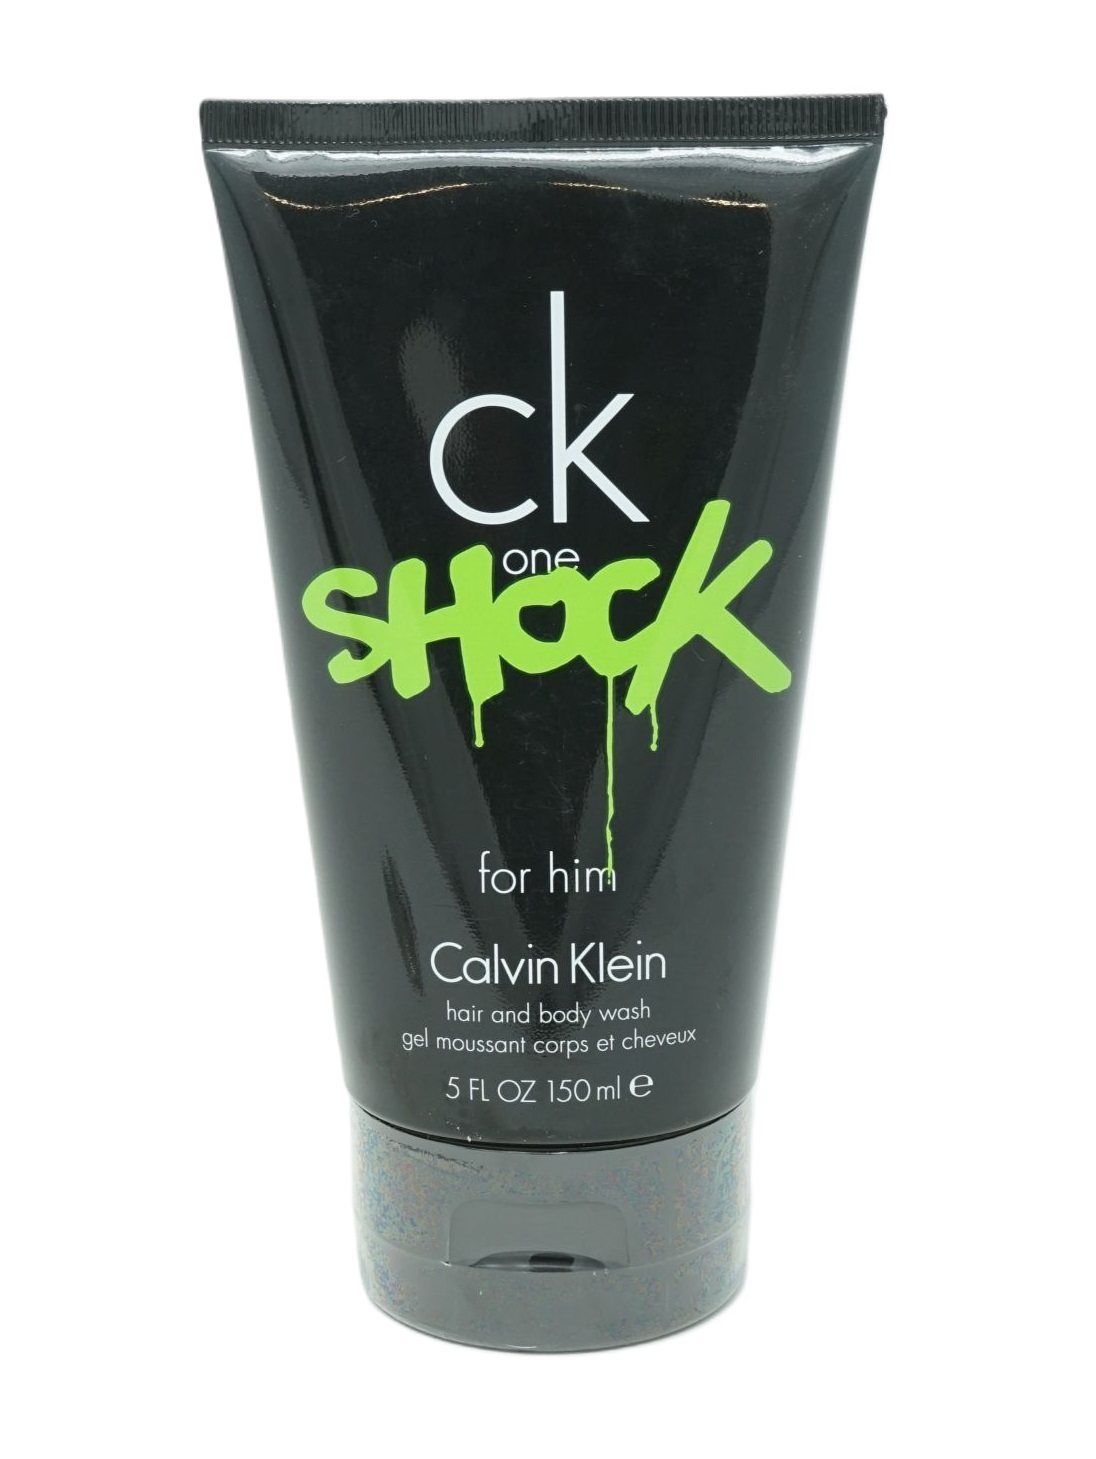 Calvin Klein Shock For Him Hair and Body wash 150ml